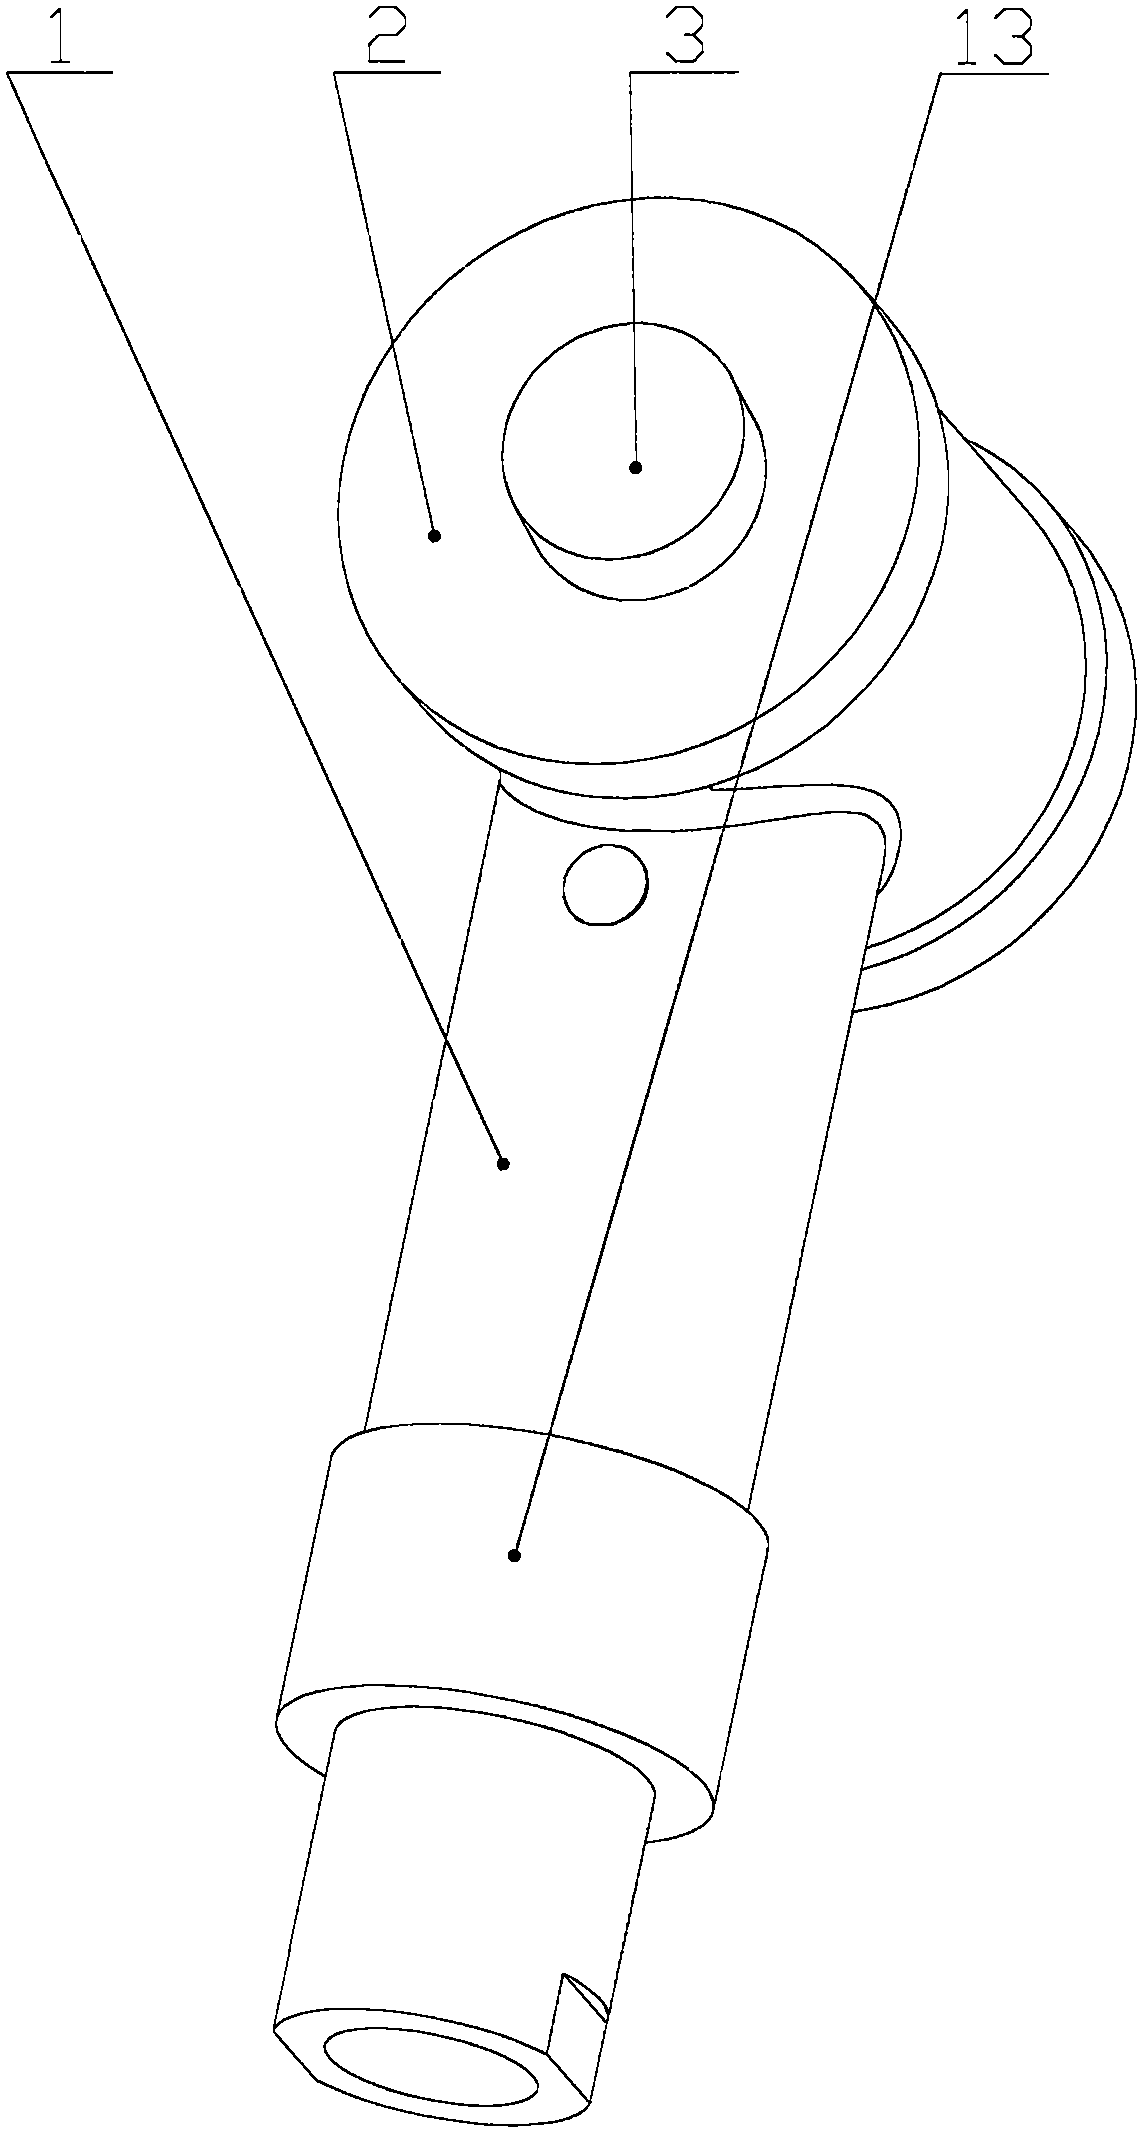 Hydraulic locking rotary joint